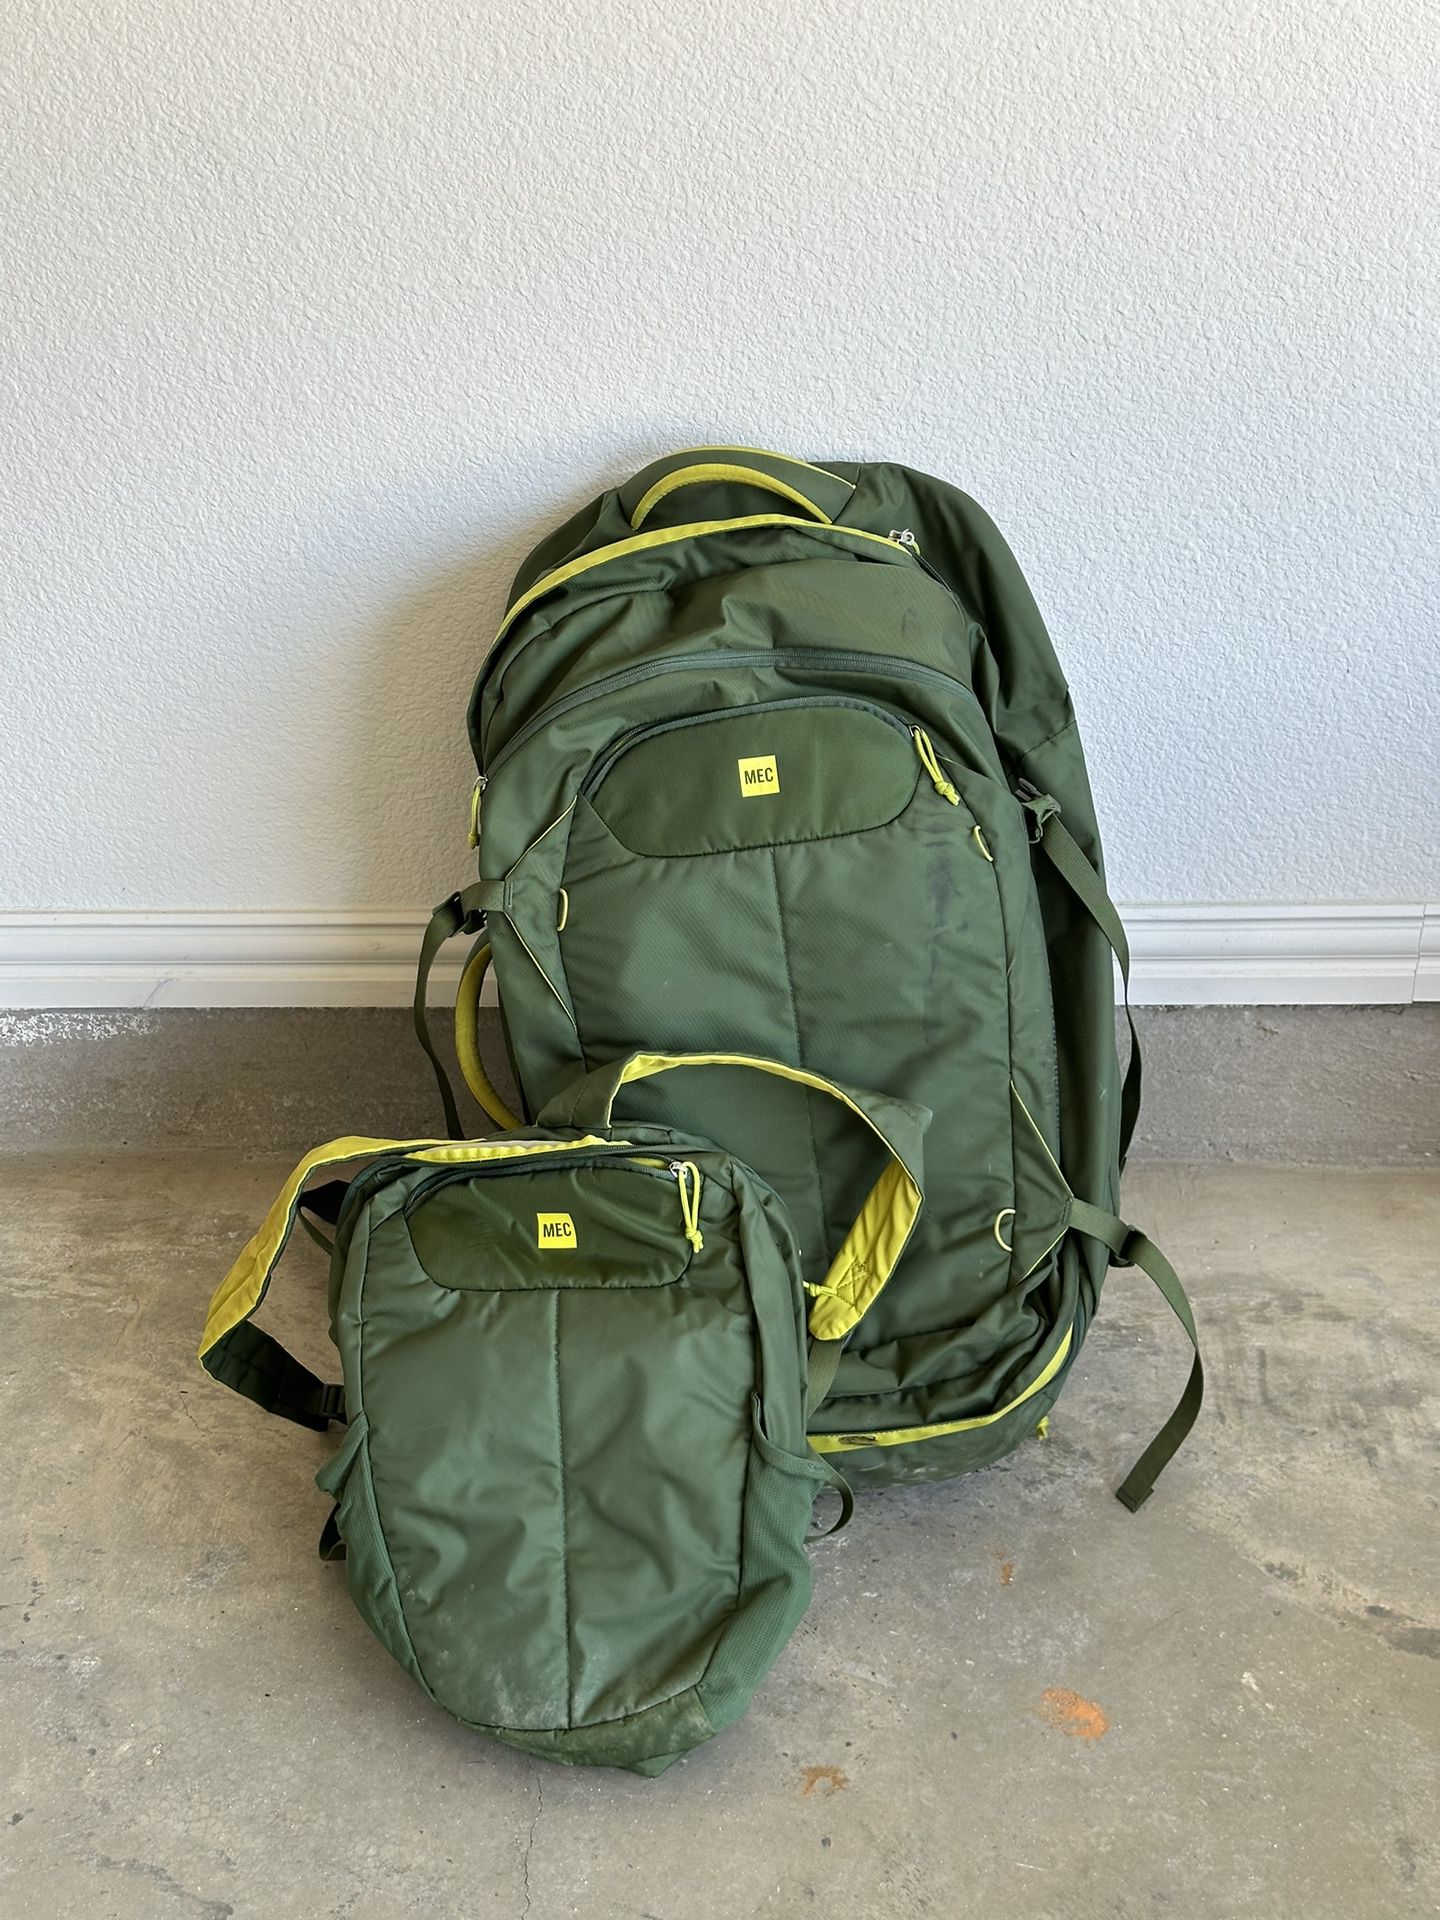 Mountain Equipment Co-op (MEC) Backpacking Travel Bag Set